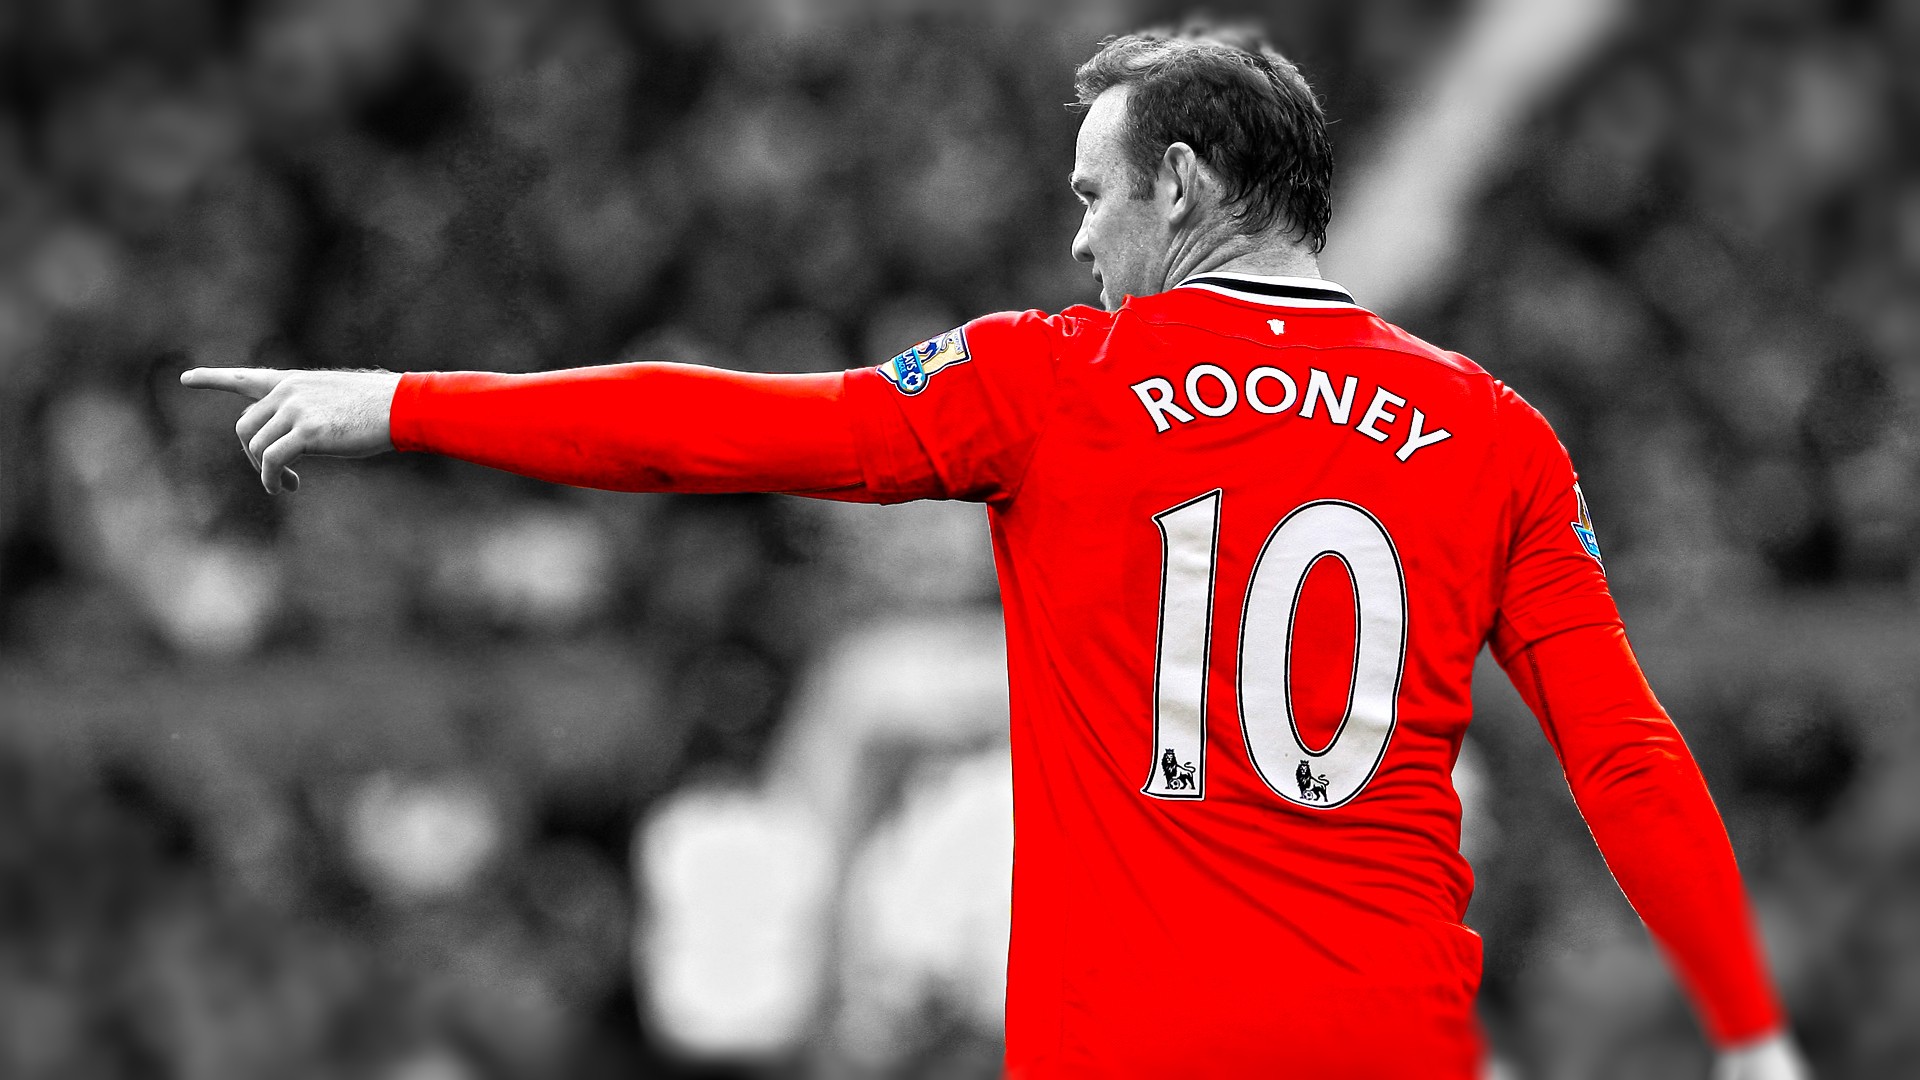 Wayne Rooney footballer wallpaper - Manu player